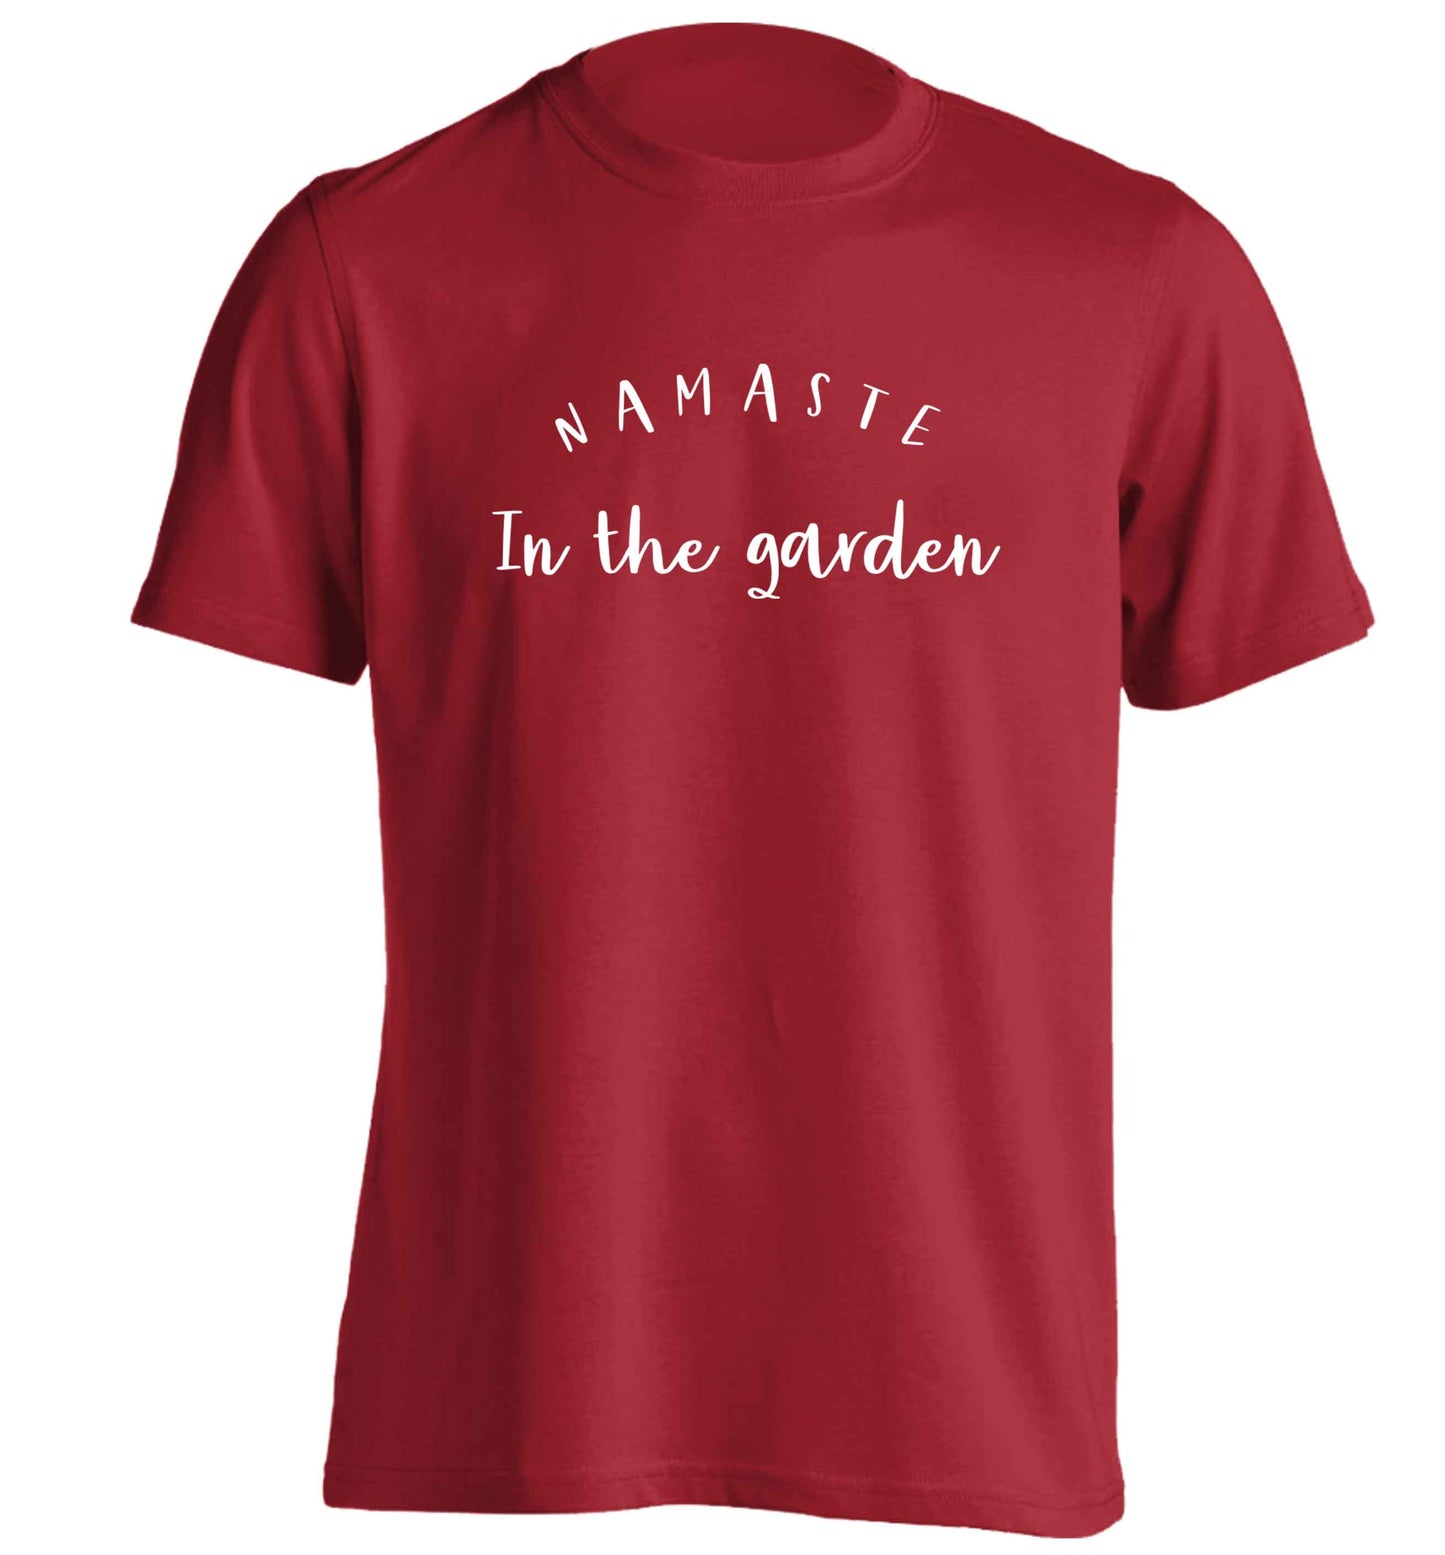 Namaste in the garden adults unisex red Tshirt 2XL